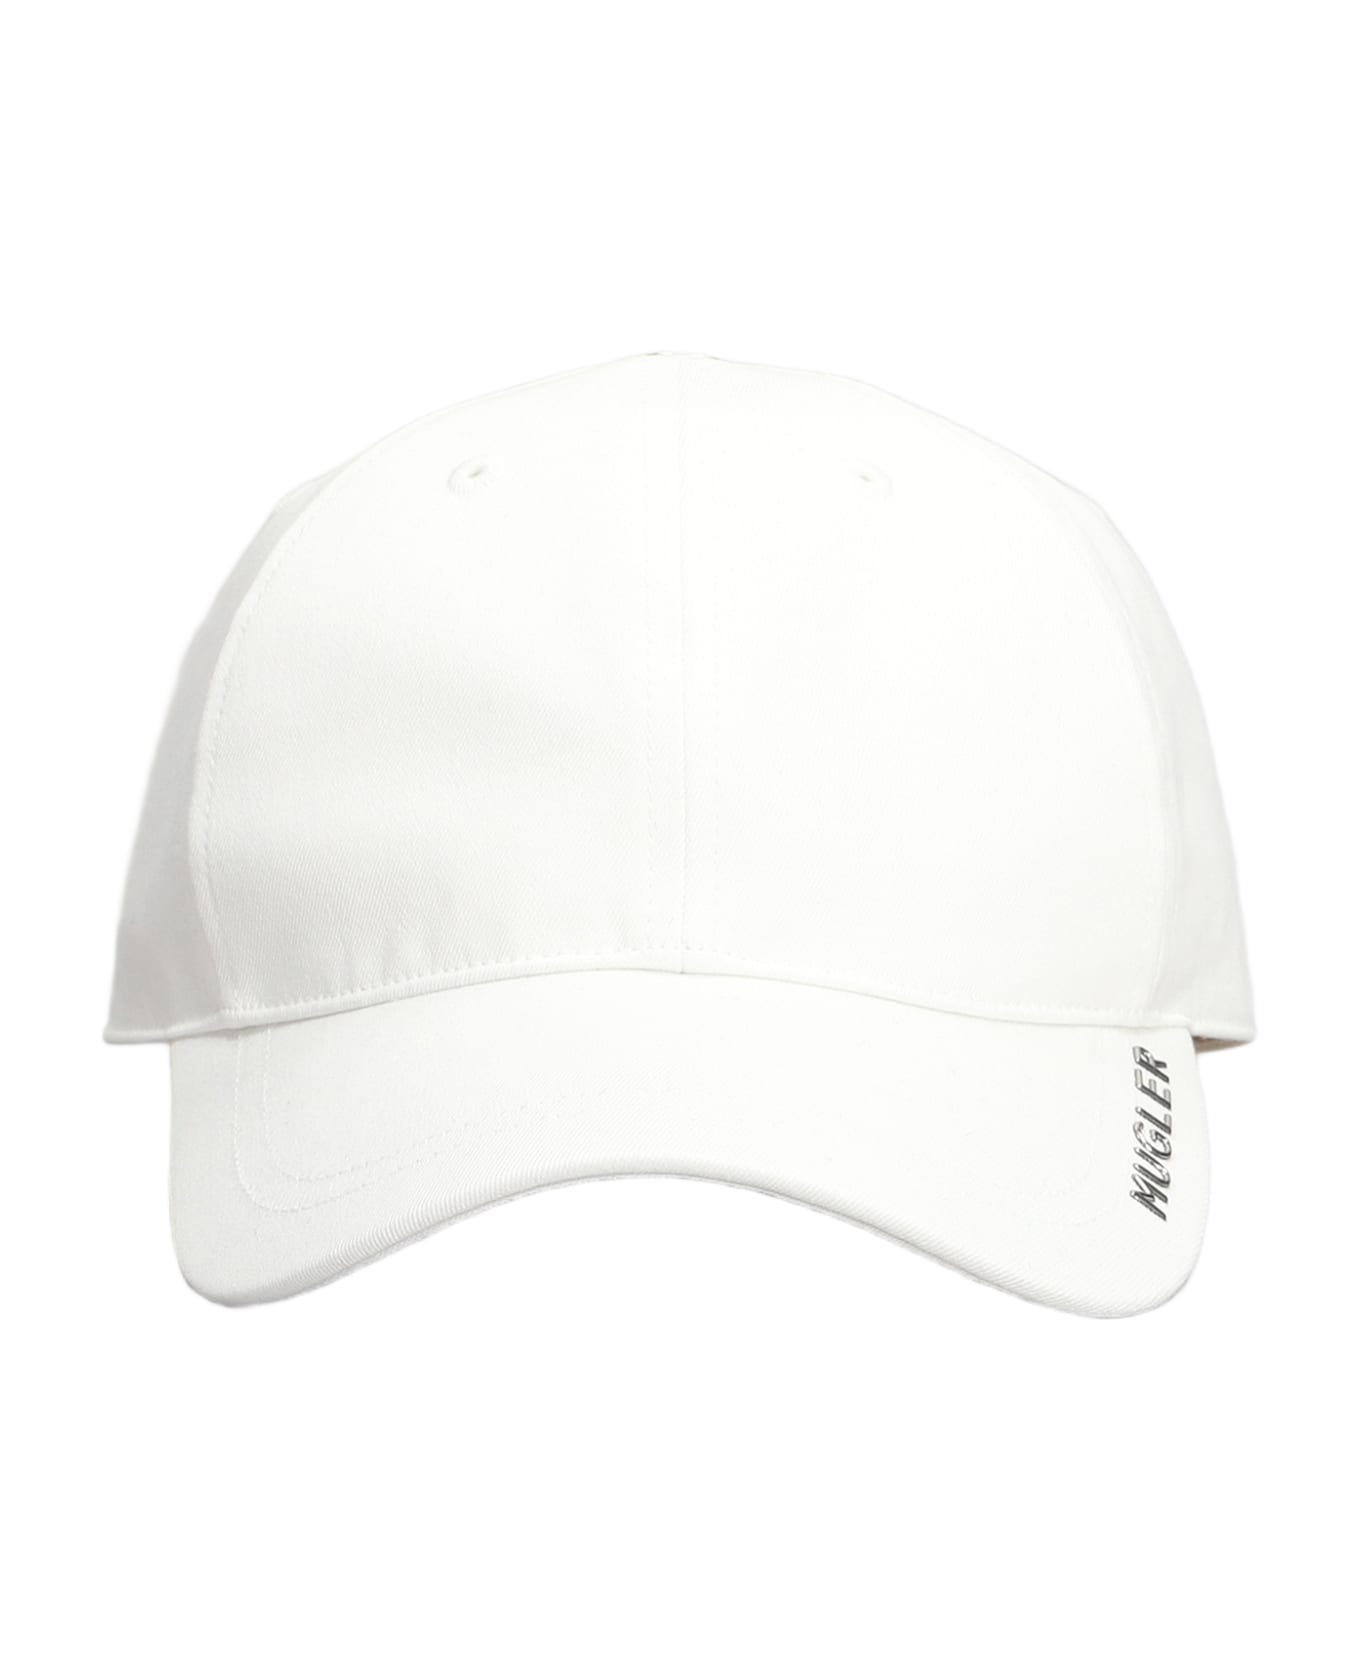 Mugler Hats In White Cotton - white